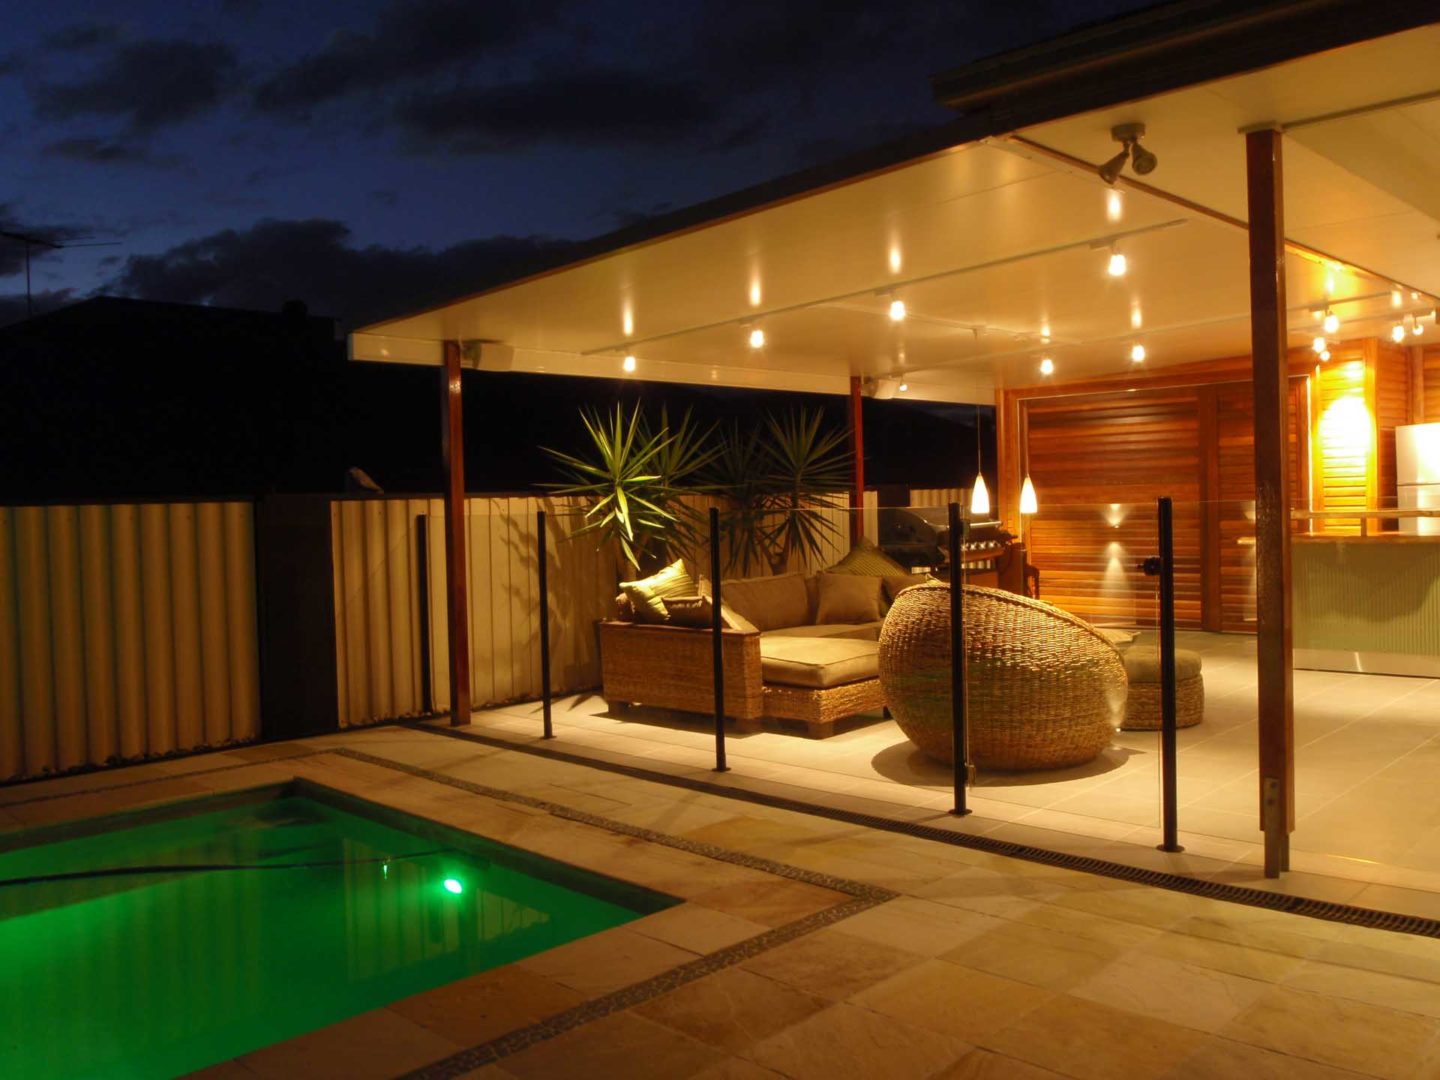 Pergola, Verandah & Patio - Looking pergola, verandah or patio installation? Get a free measure and quote in Adelaide, Sydney, Melbourne, Brisbane, Perth. We install Australian Wide.